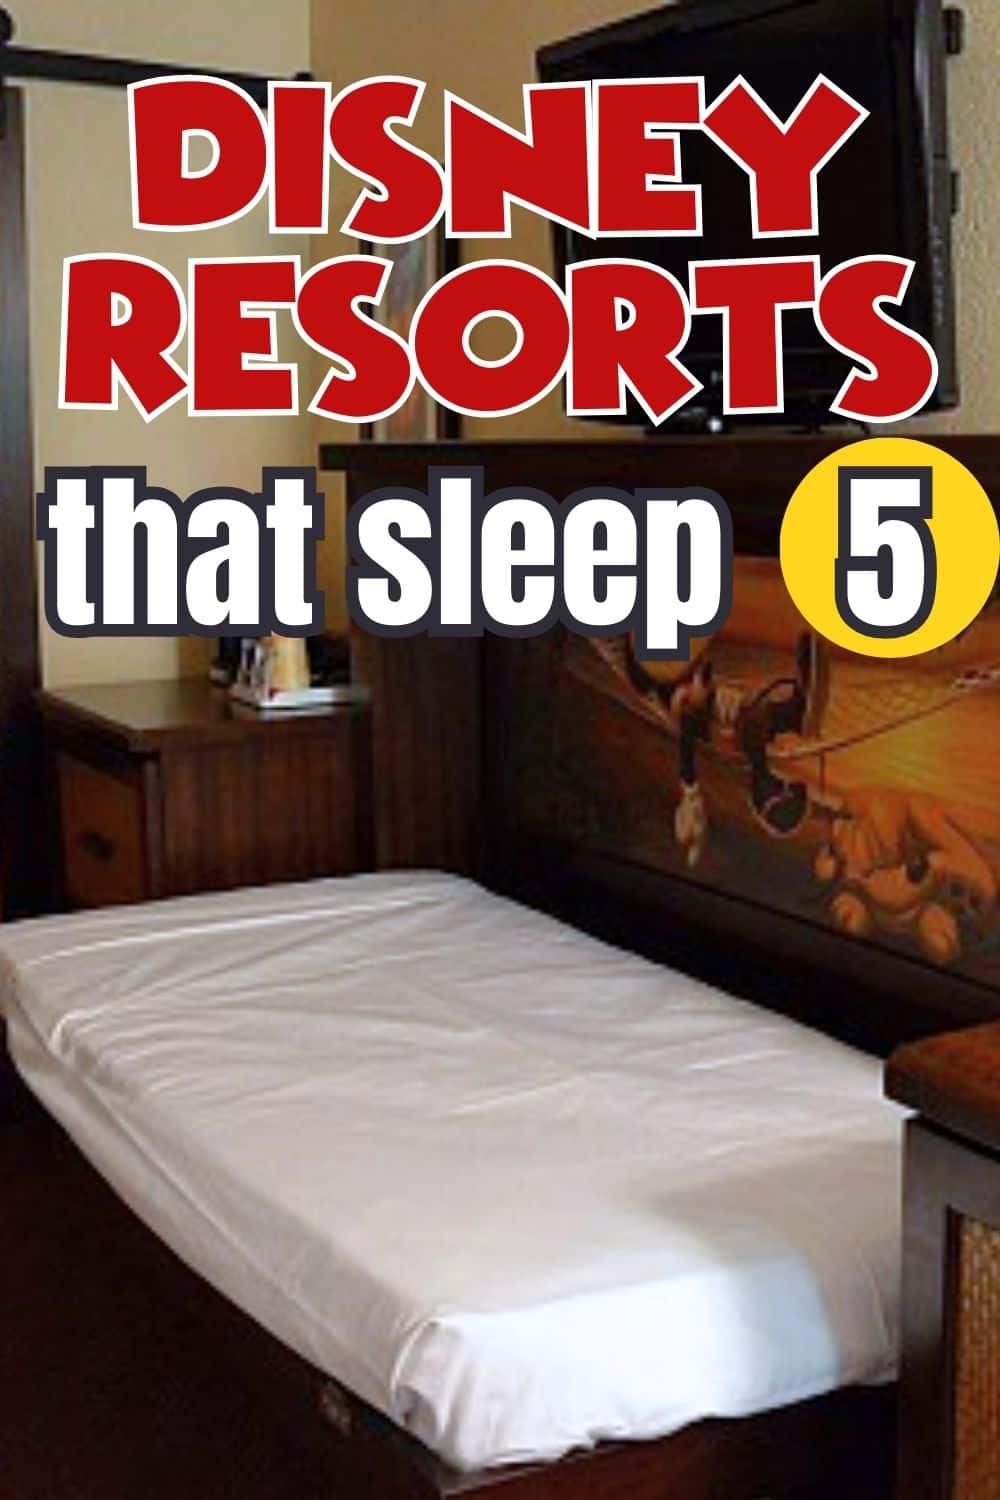 DIsney Resorts that Sleep 5